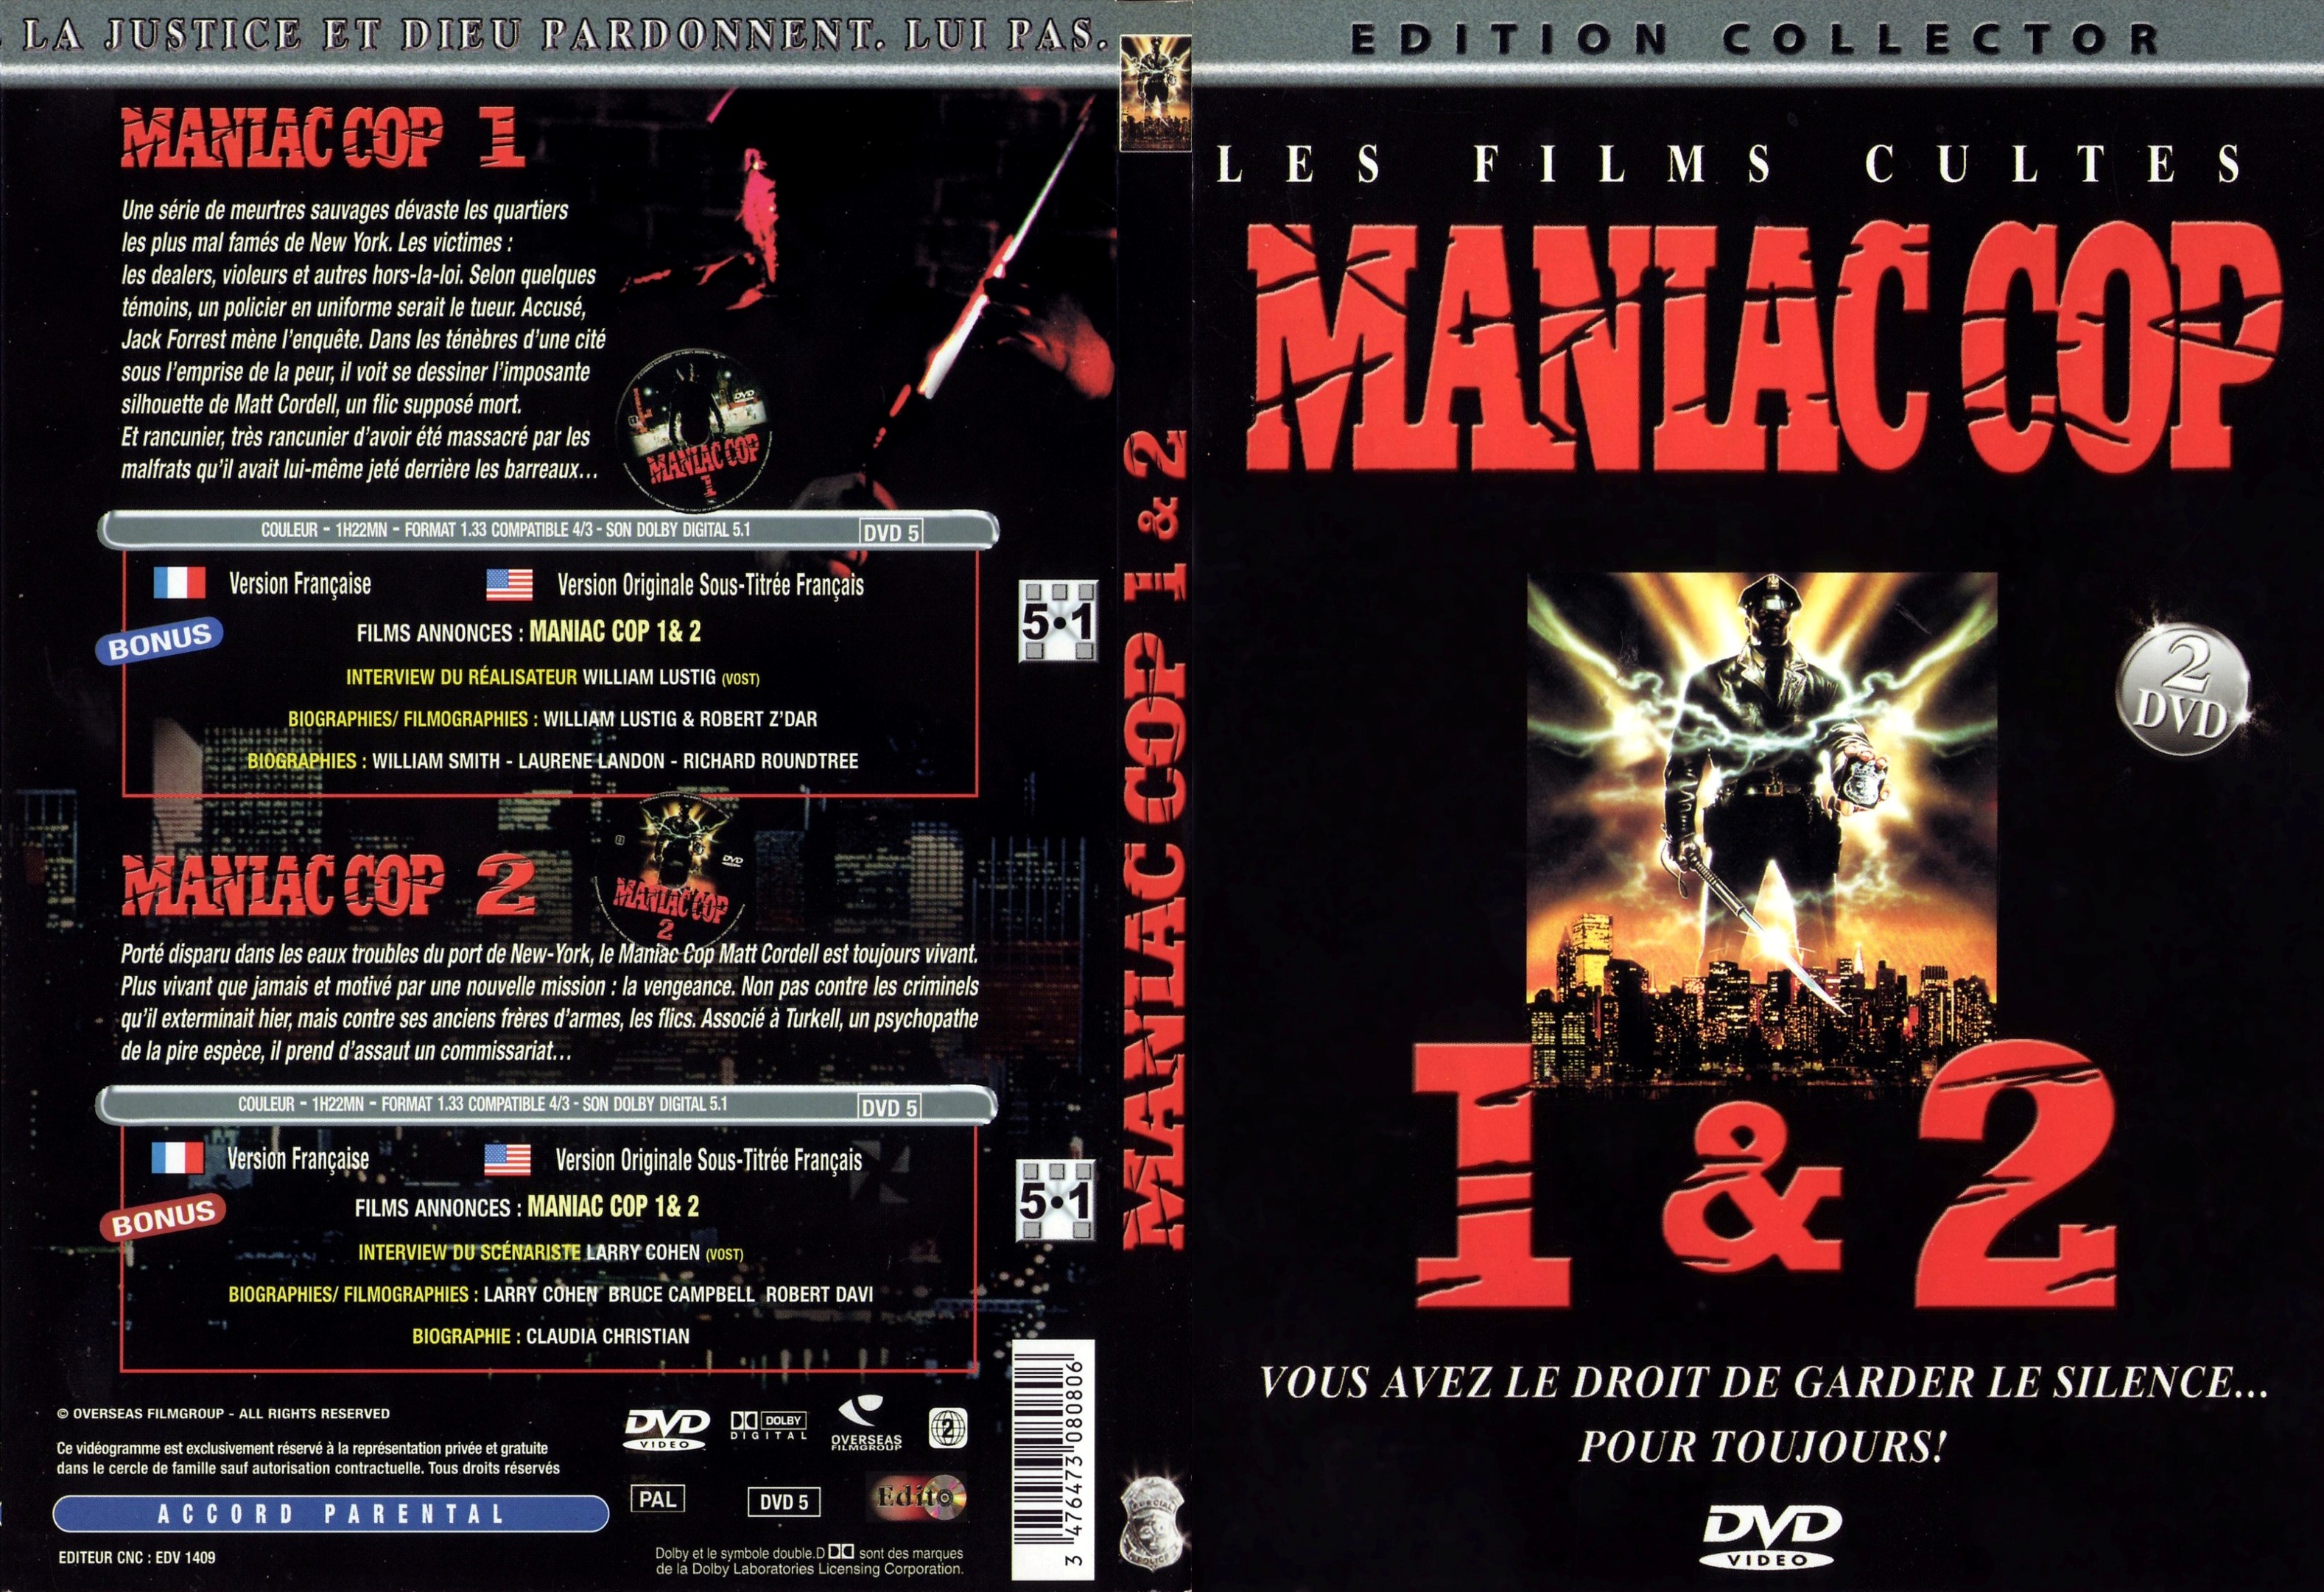 Jaquette DVD Maniac cop 1 + 2 - SLIM